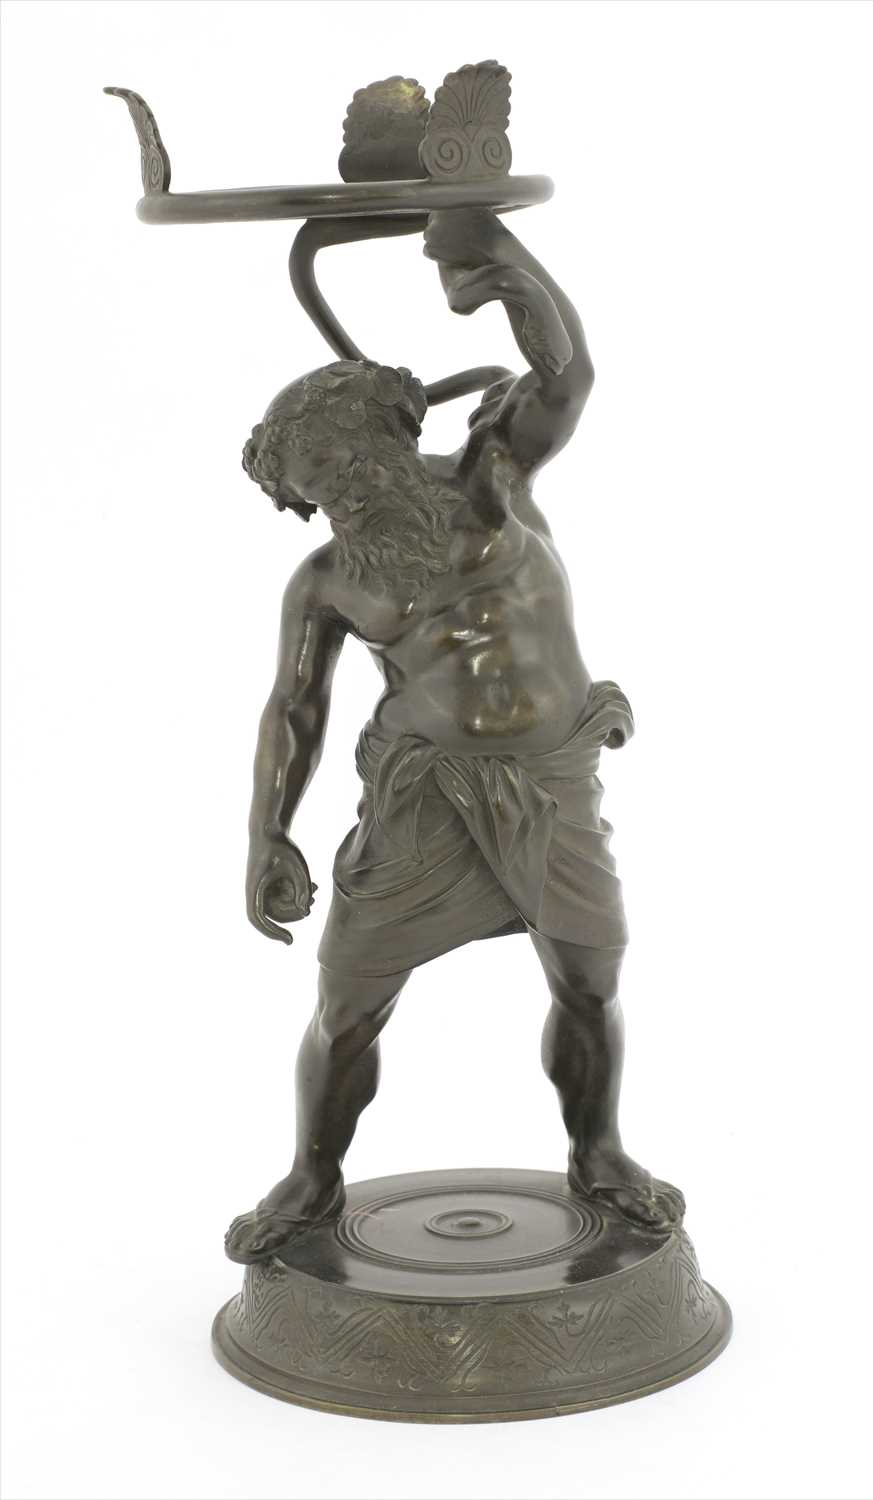 Lot 38 - A Grand Tour-type bronze figure